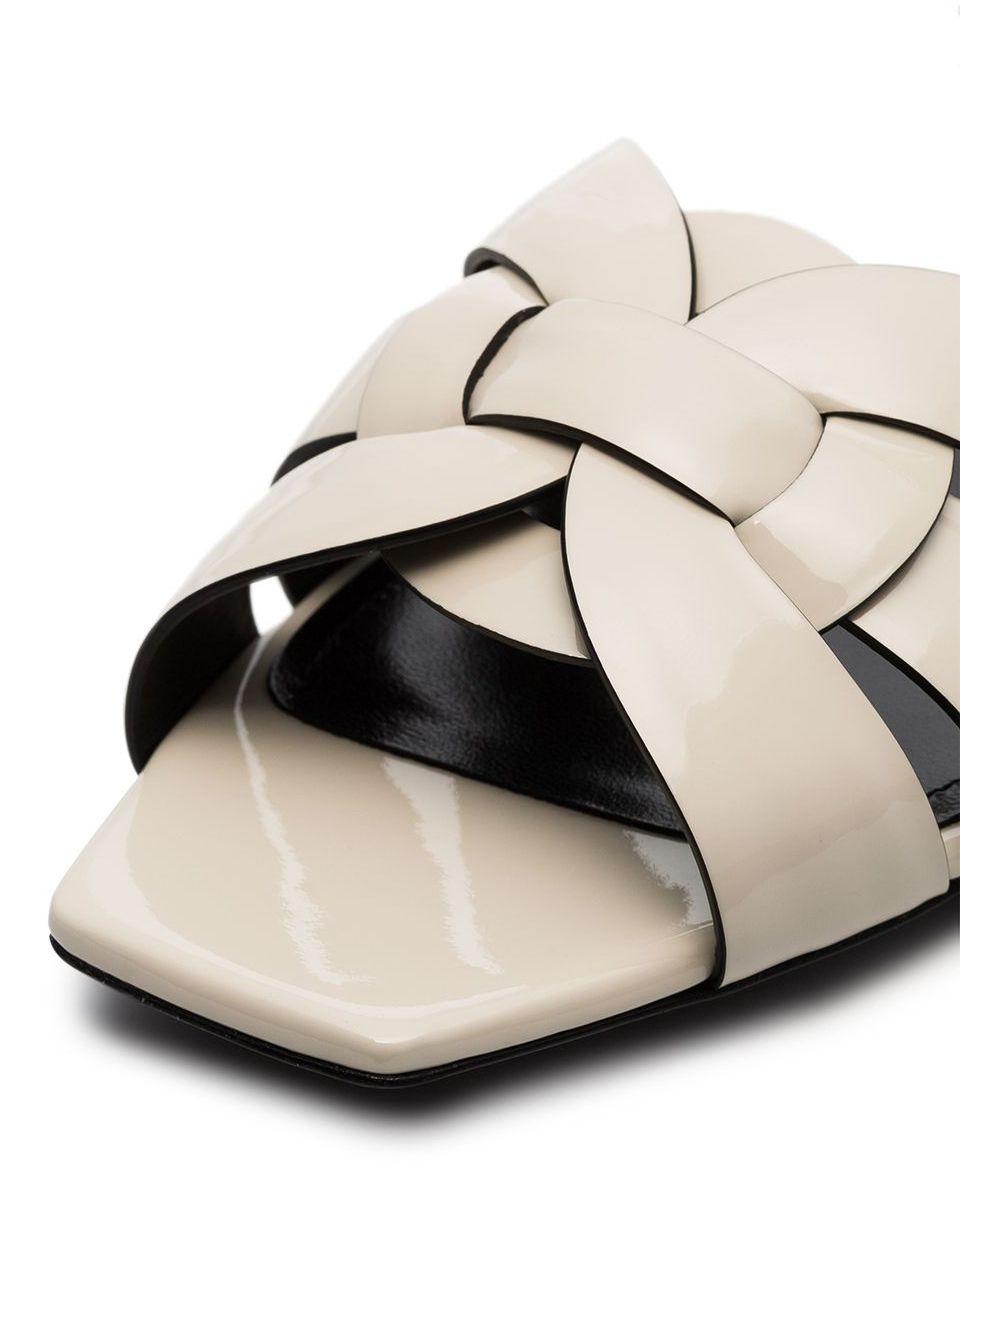 Saint Laurent Off-white Nu Pieds Woven Leather Flat Sandals | Lyst